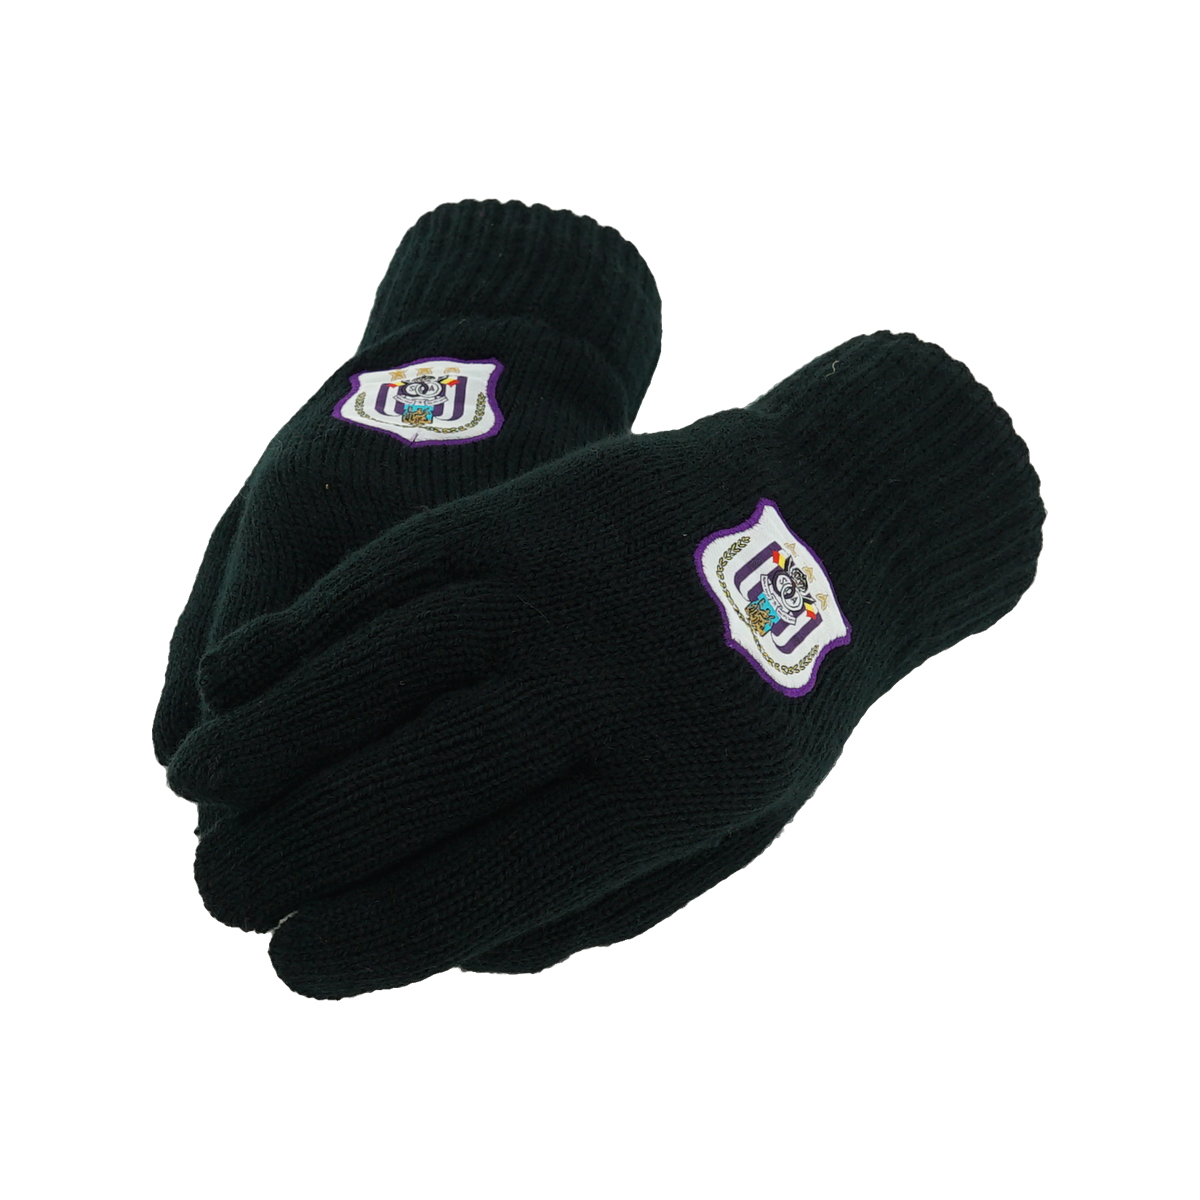 RSCA Gloves Kids